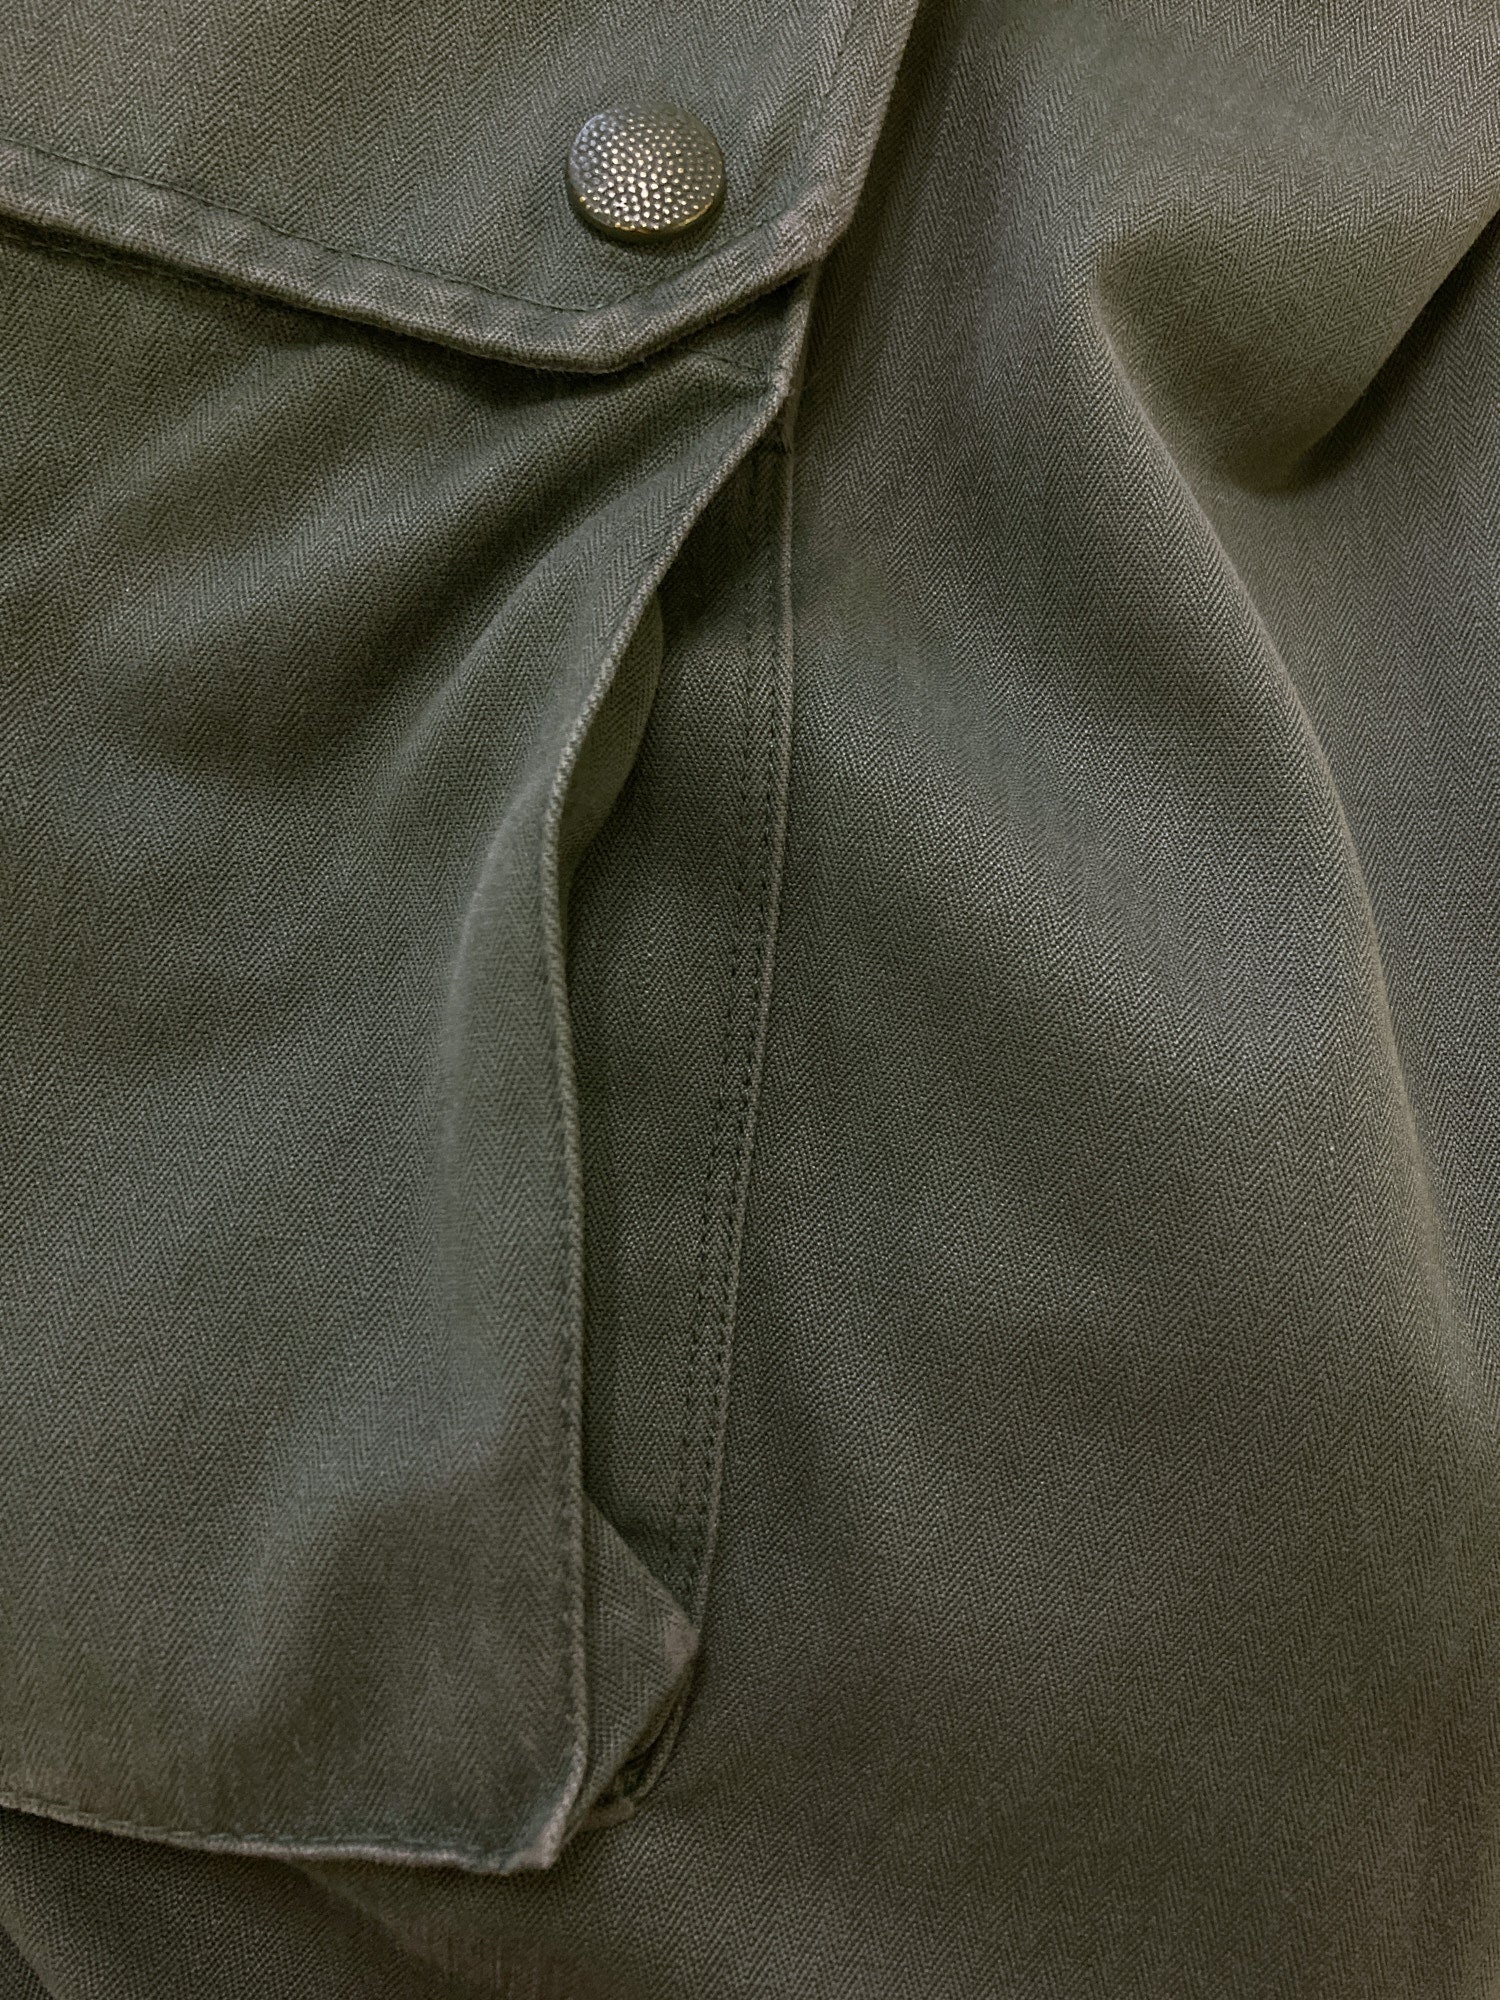 Vintage Seyntex khaki cotton army surplus cargo trousers - mens S XS